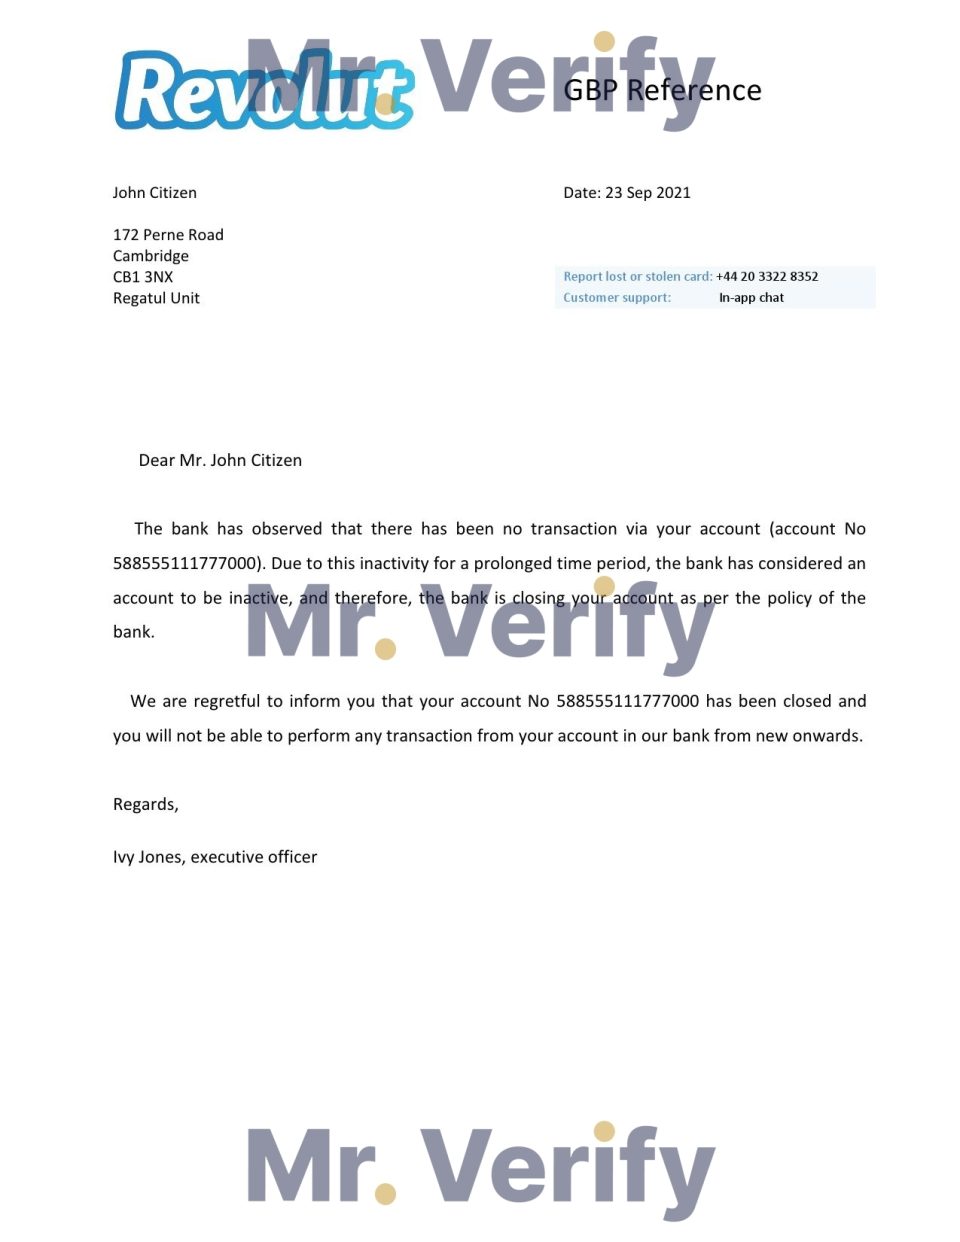 Download United Kingdom Revolut Bank Reference Letter Templates | Editable Word